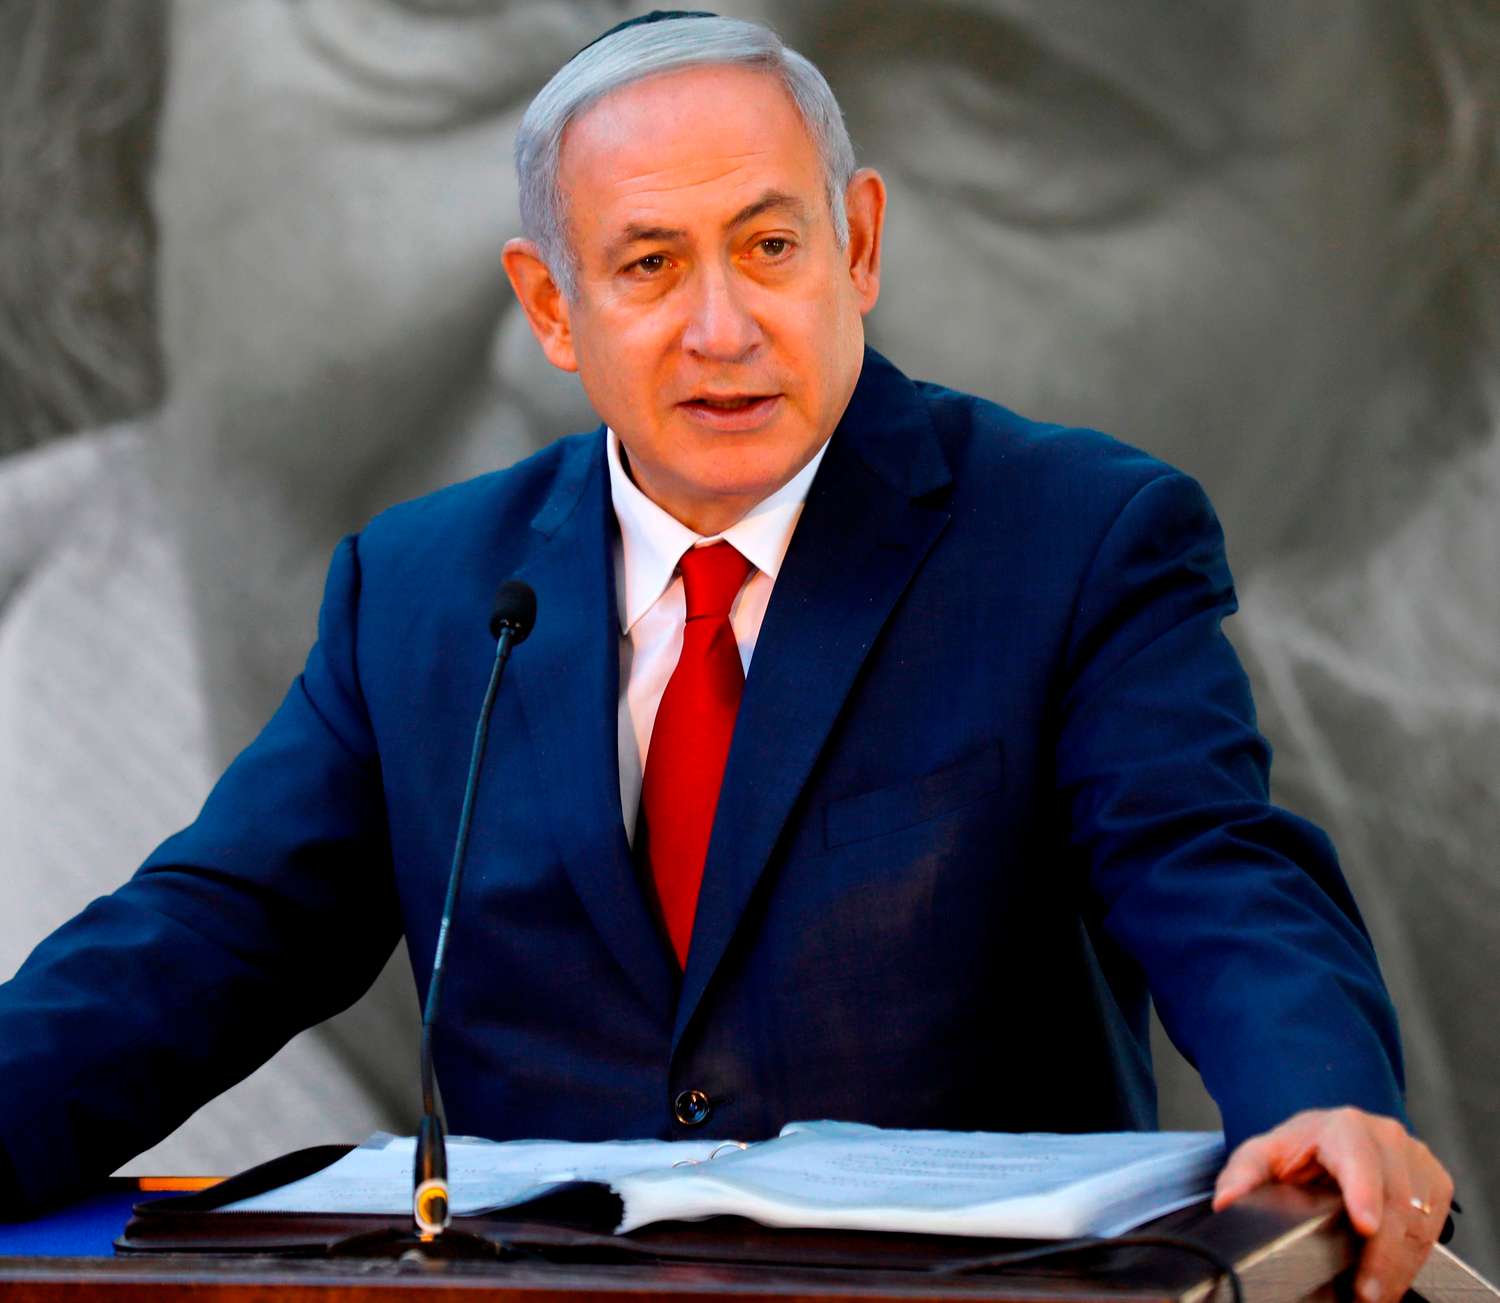 Netanyahu asumió la cartera de Defensa y se negó a llamar elecciones anticipadas